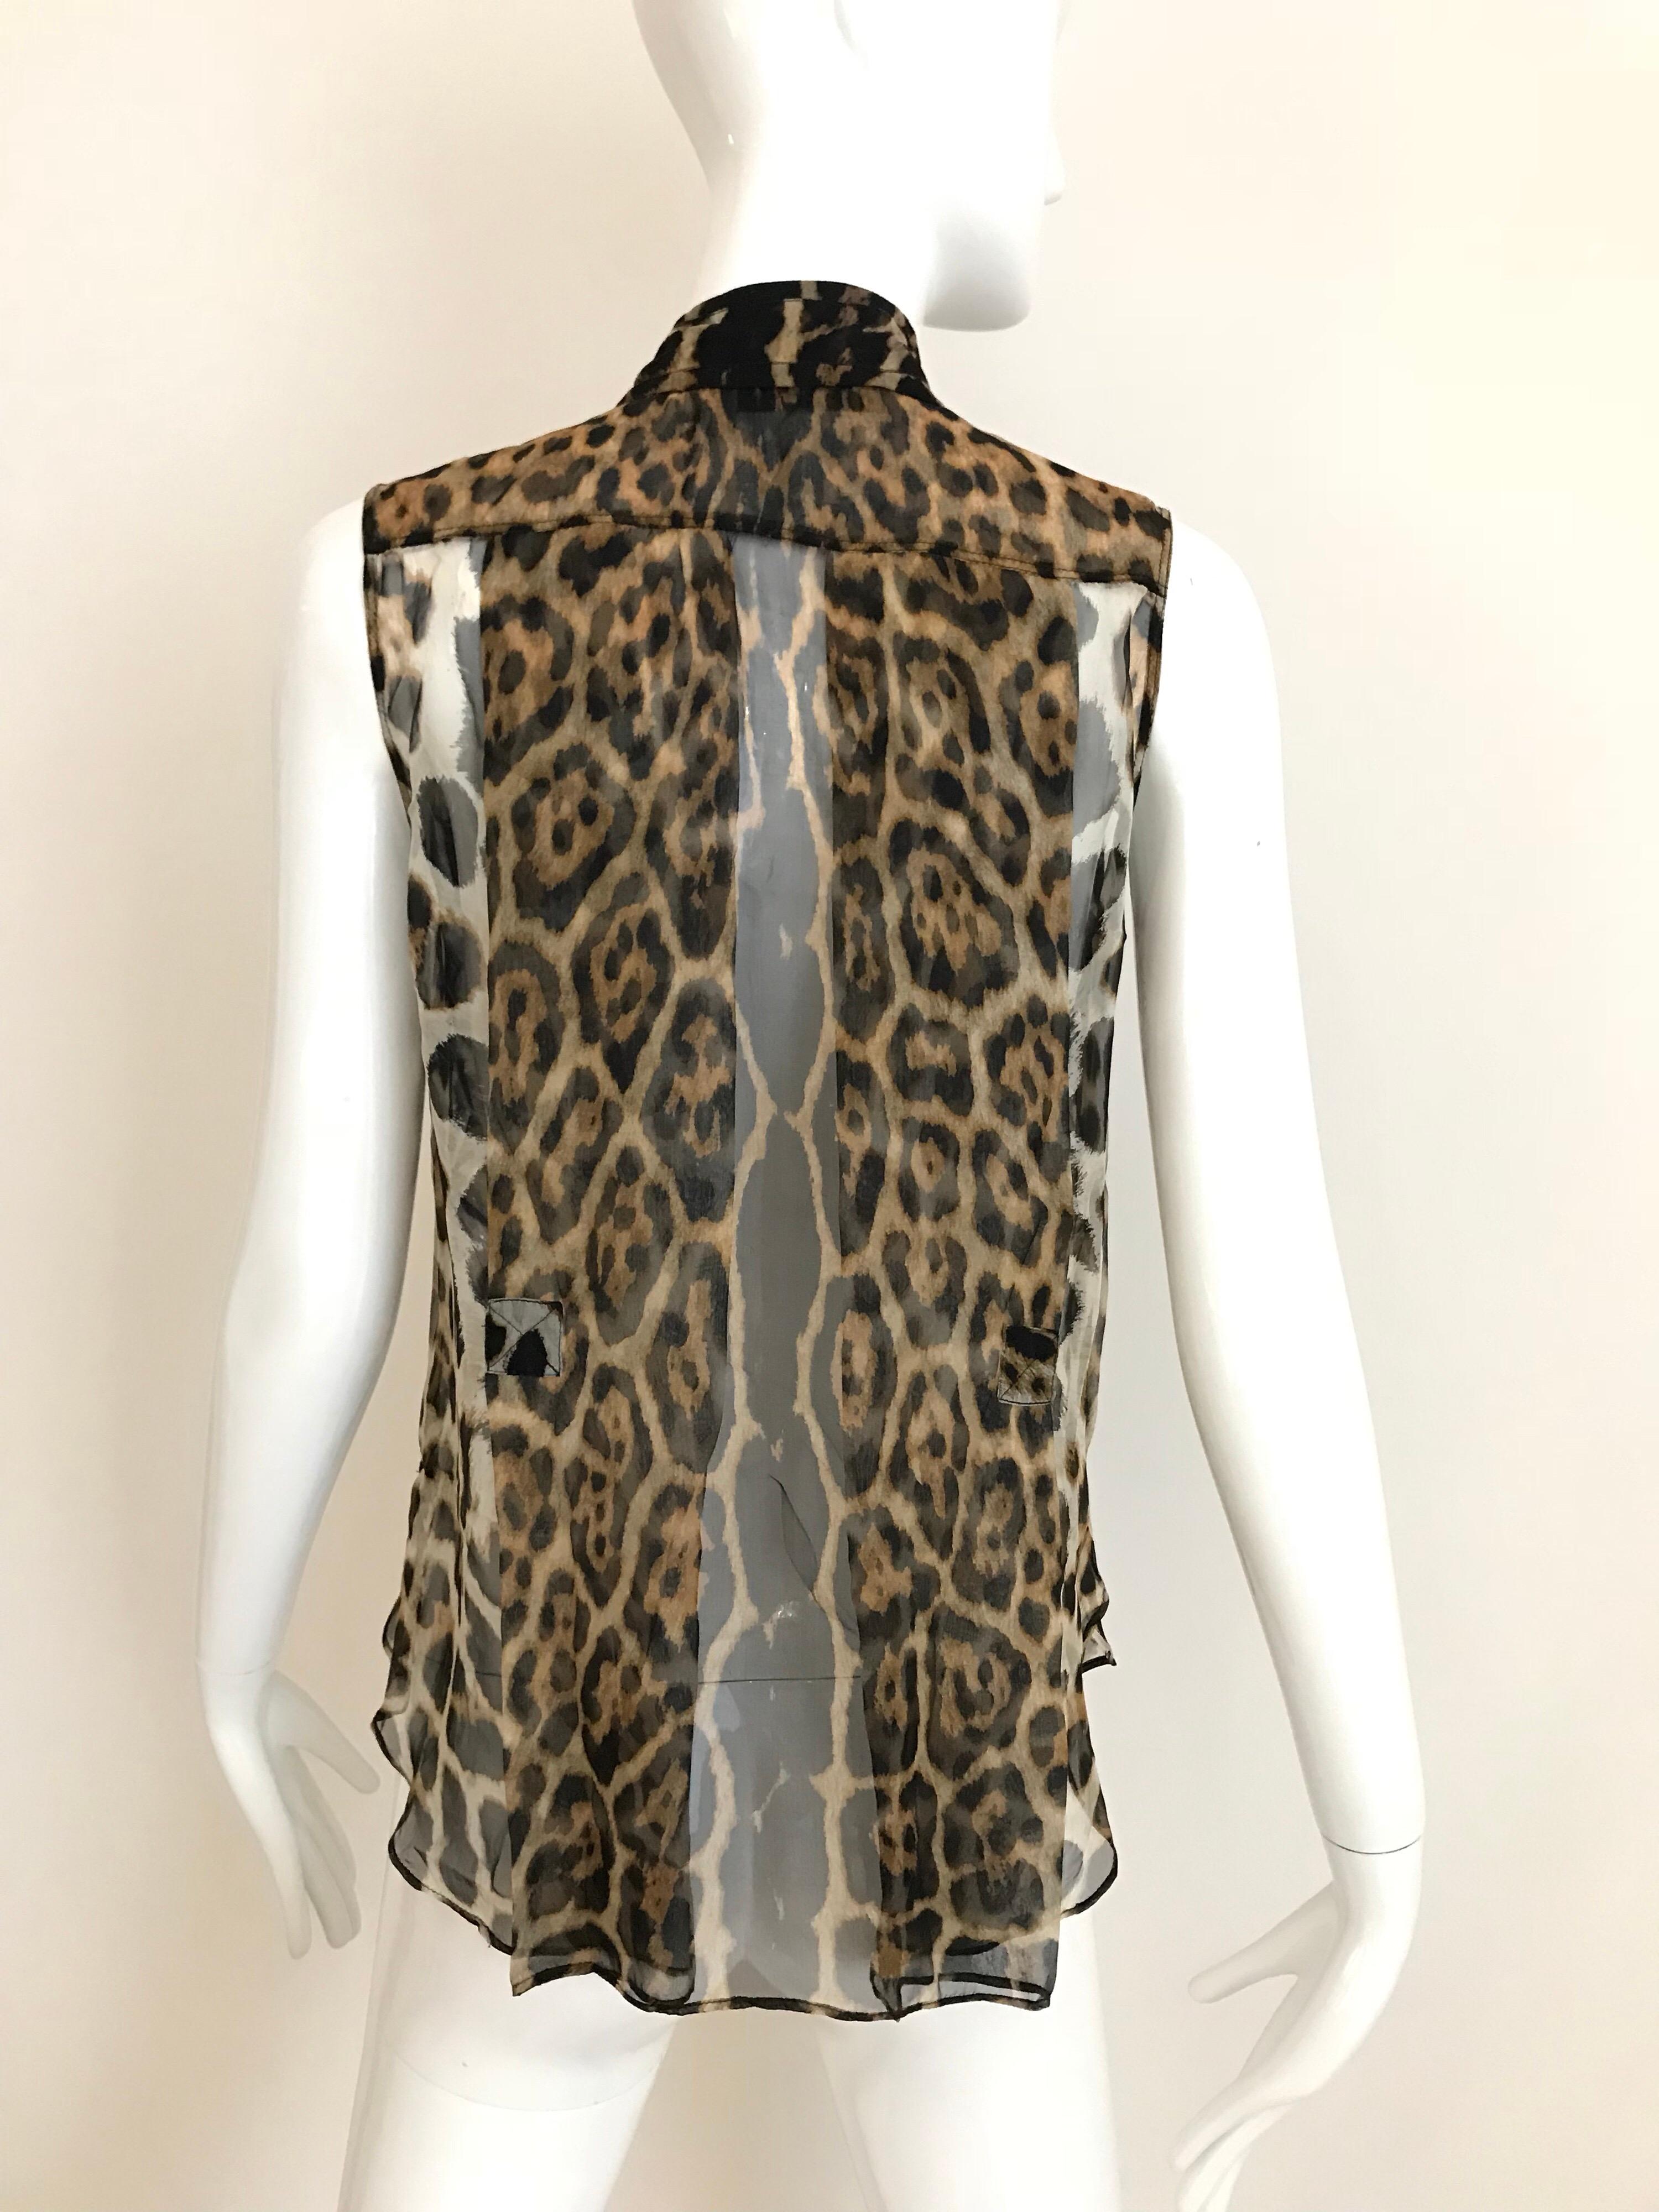 leopard print sleeveless blouse